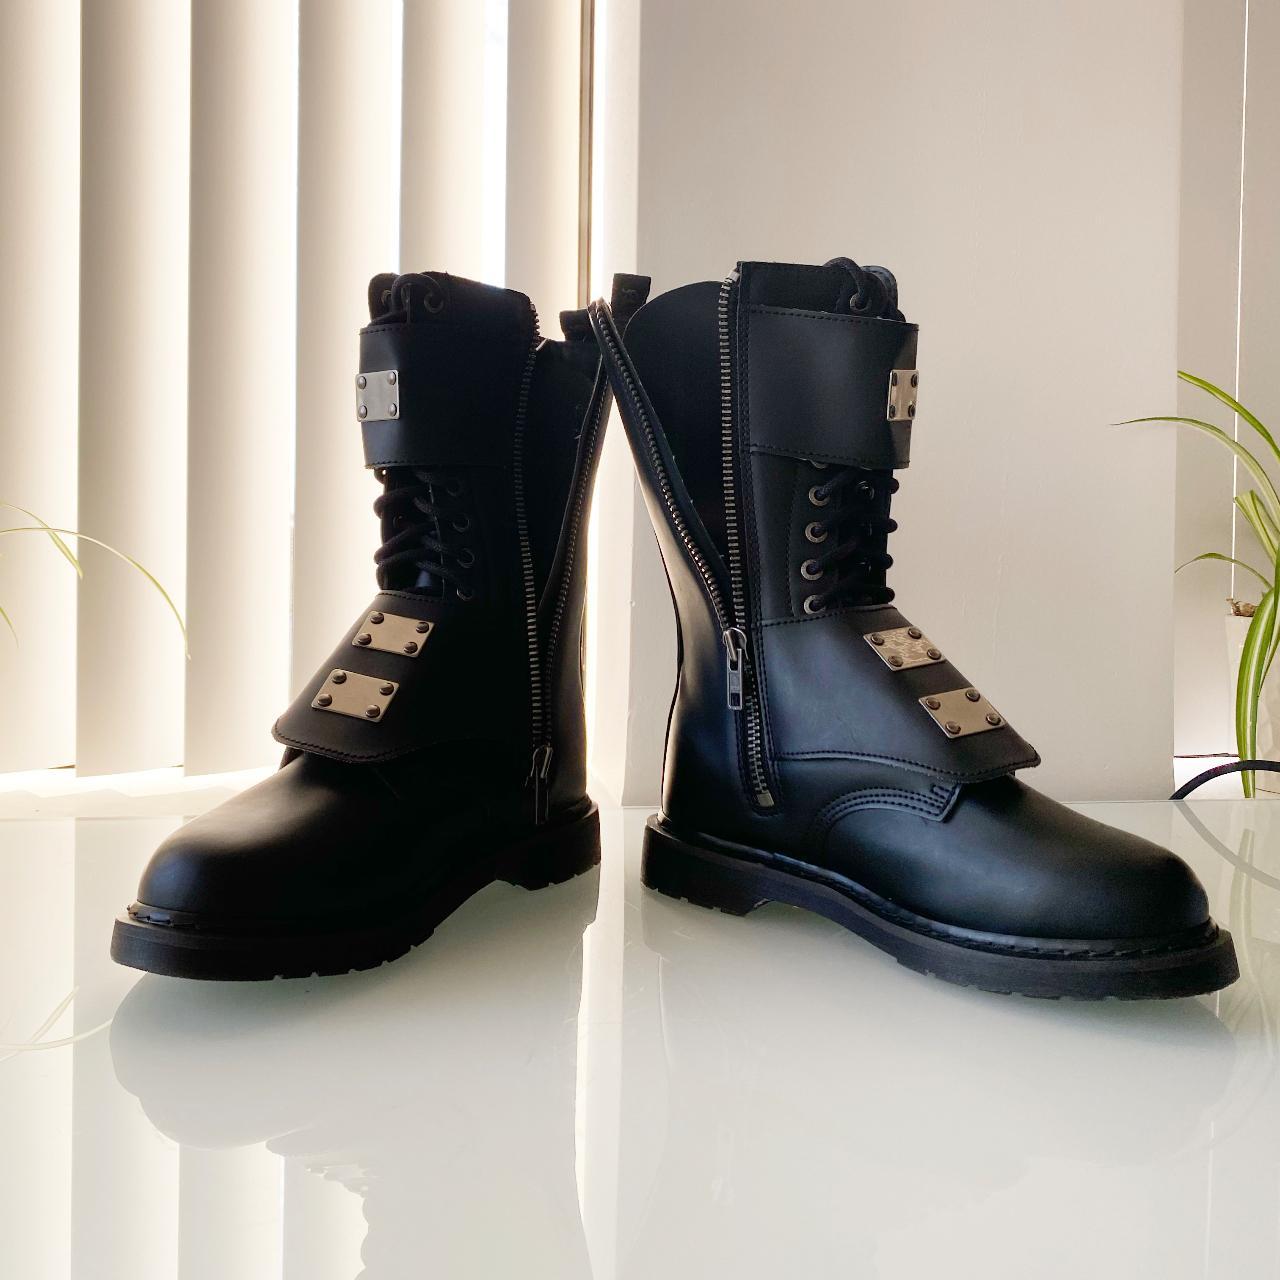 Demonia Men's Black Boots (2)